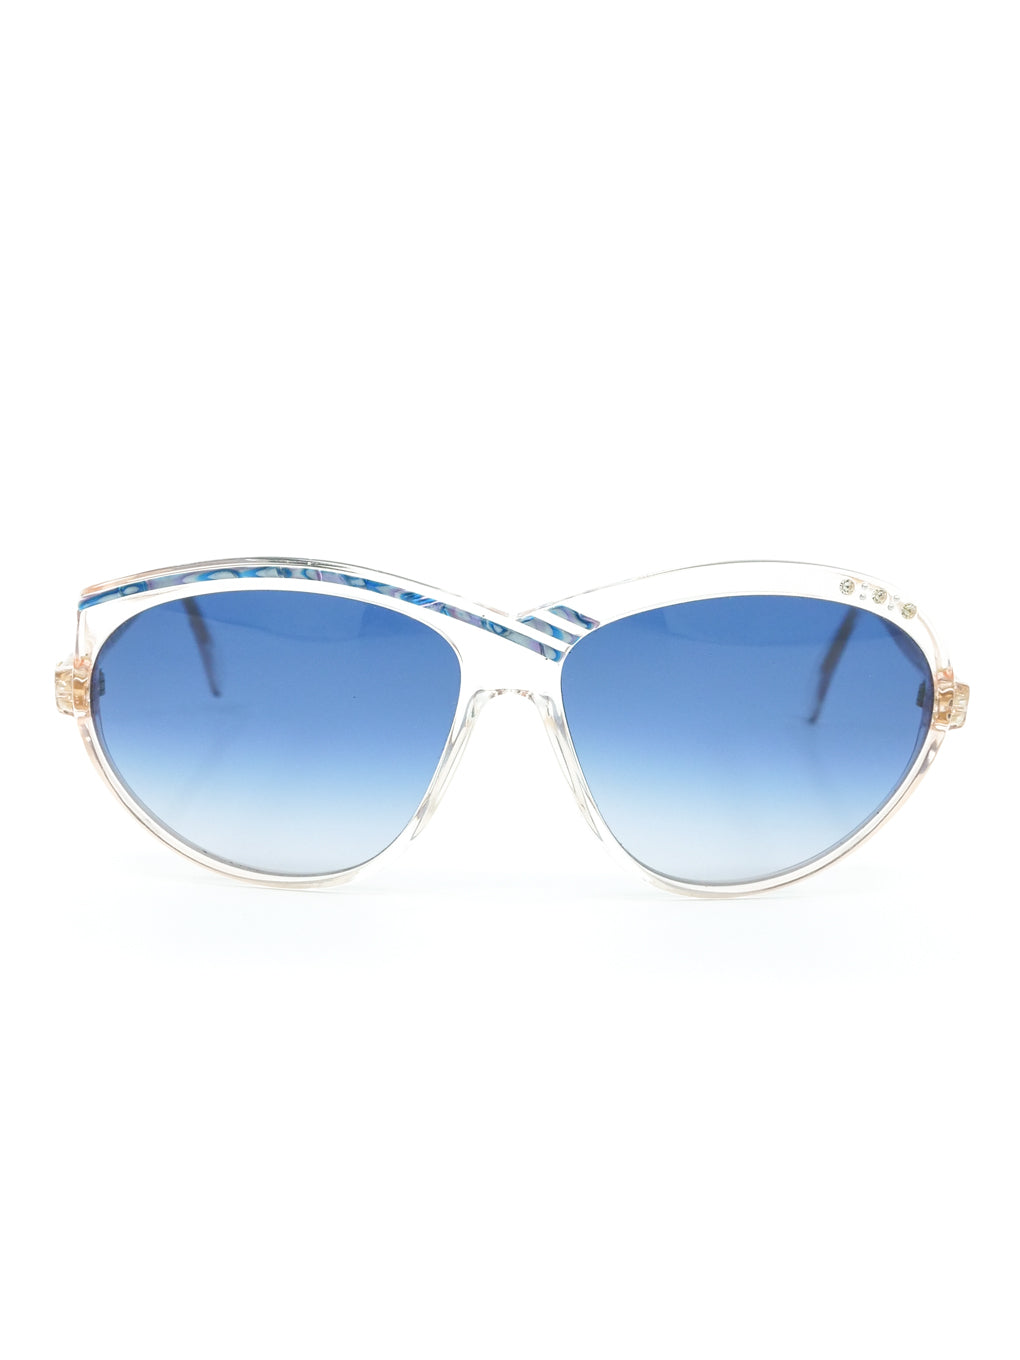 Cazal Blue Accent Sunglasses